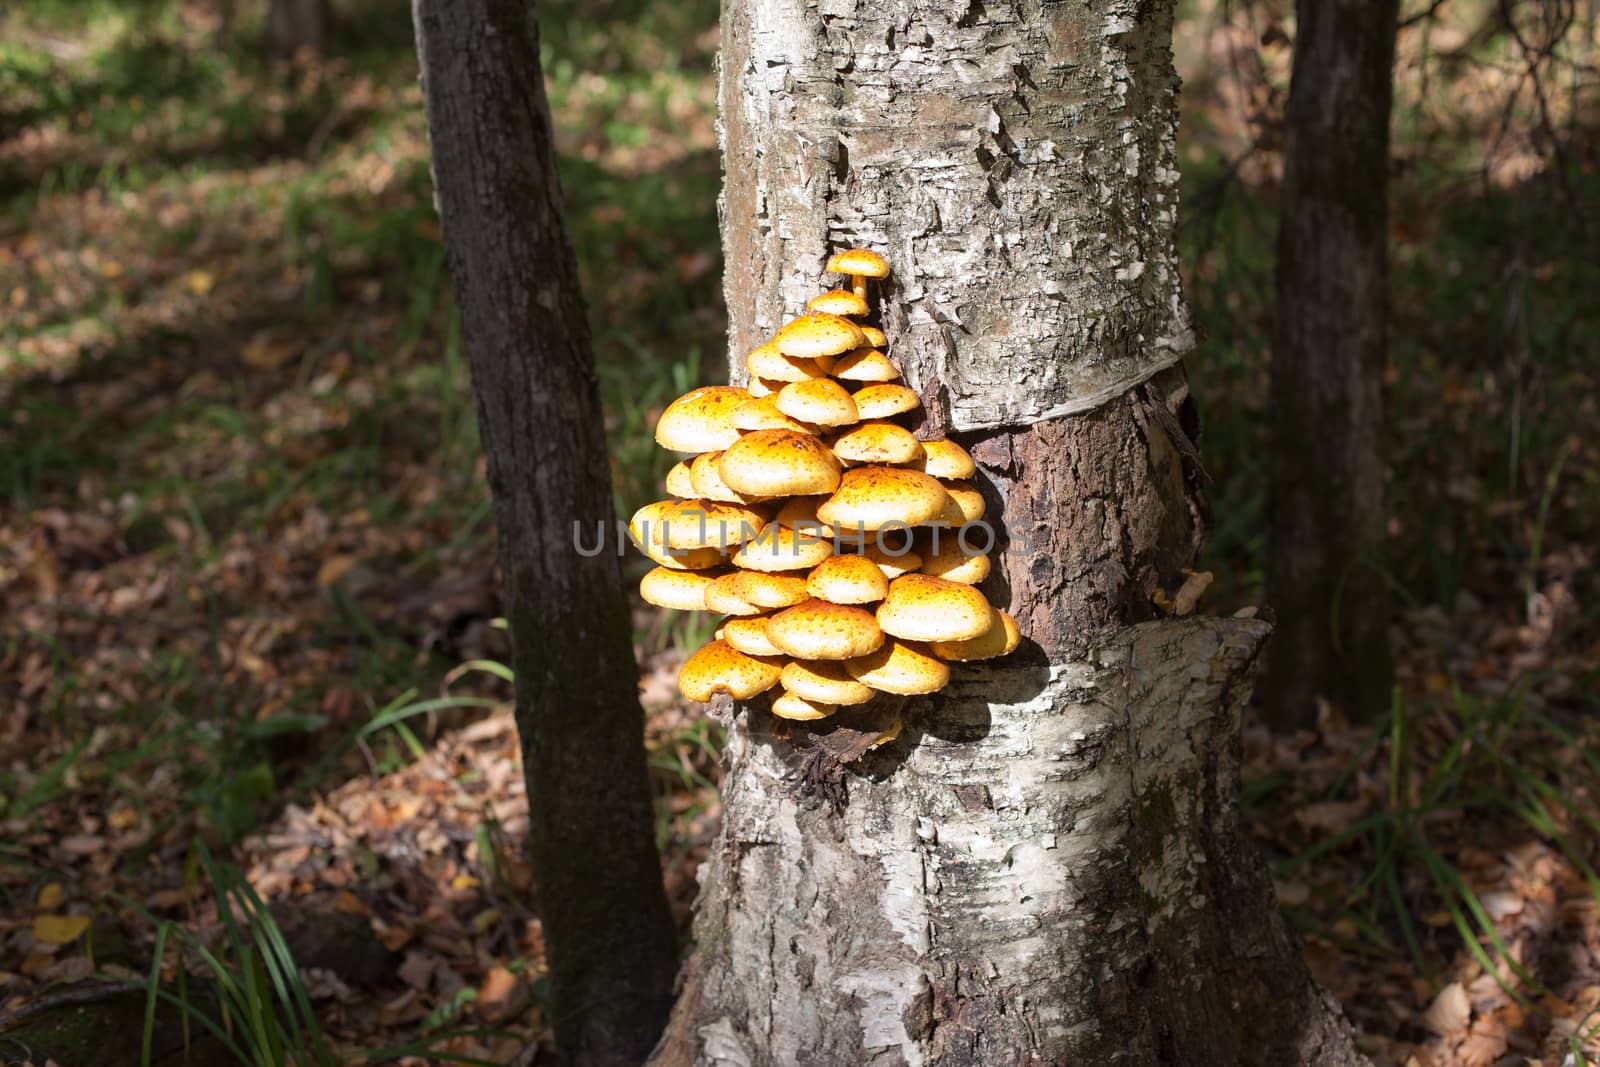 Many yellow mushrooms on atree trunk
